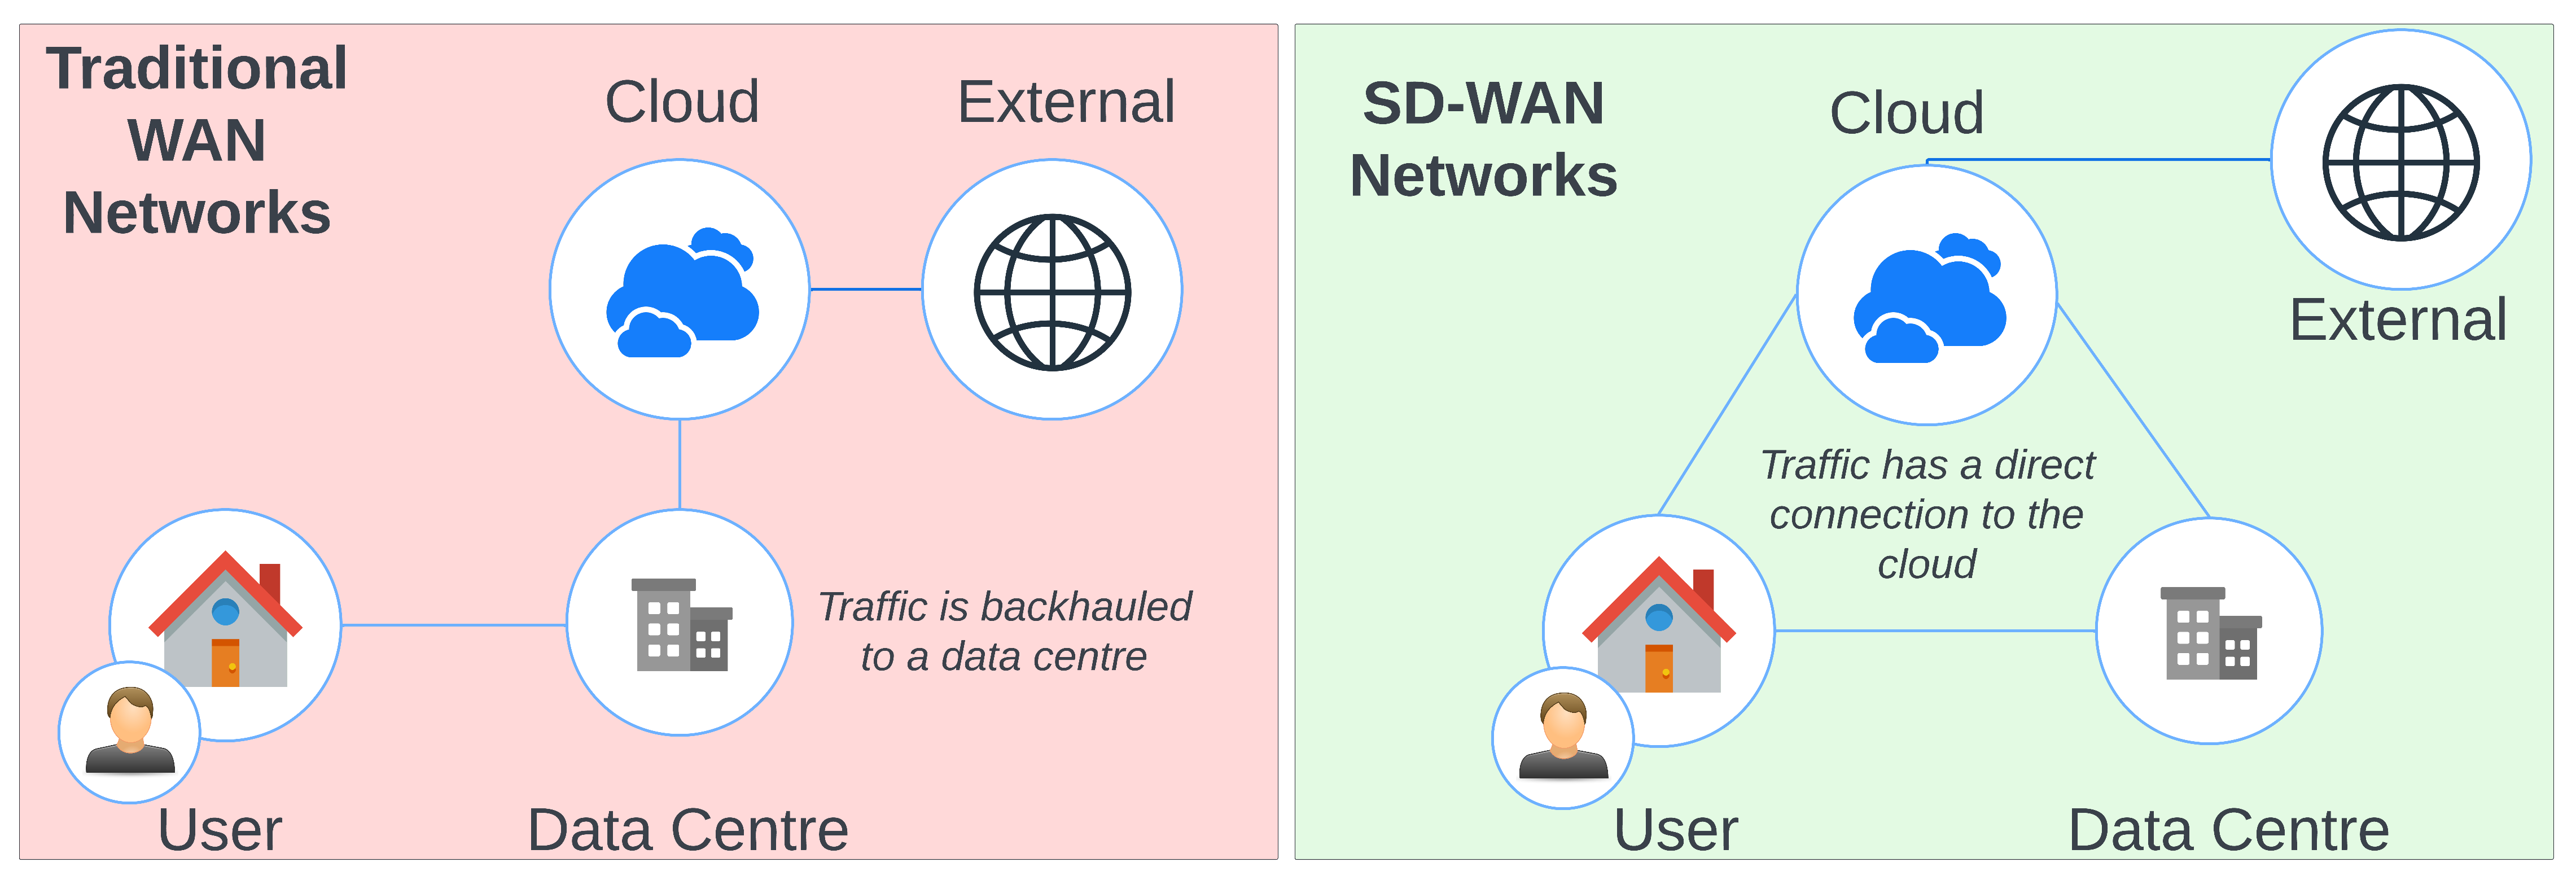 Traditional WAN VS SD-WAN-2